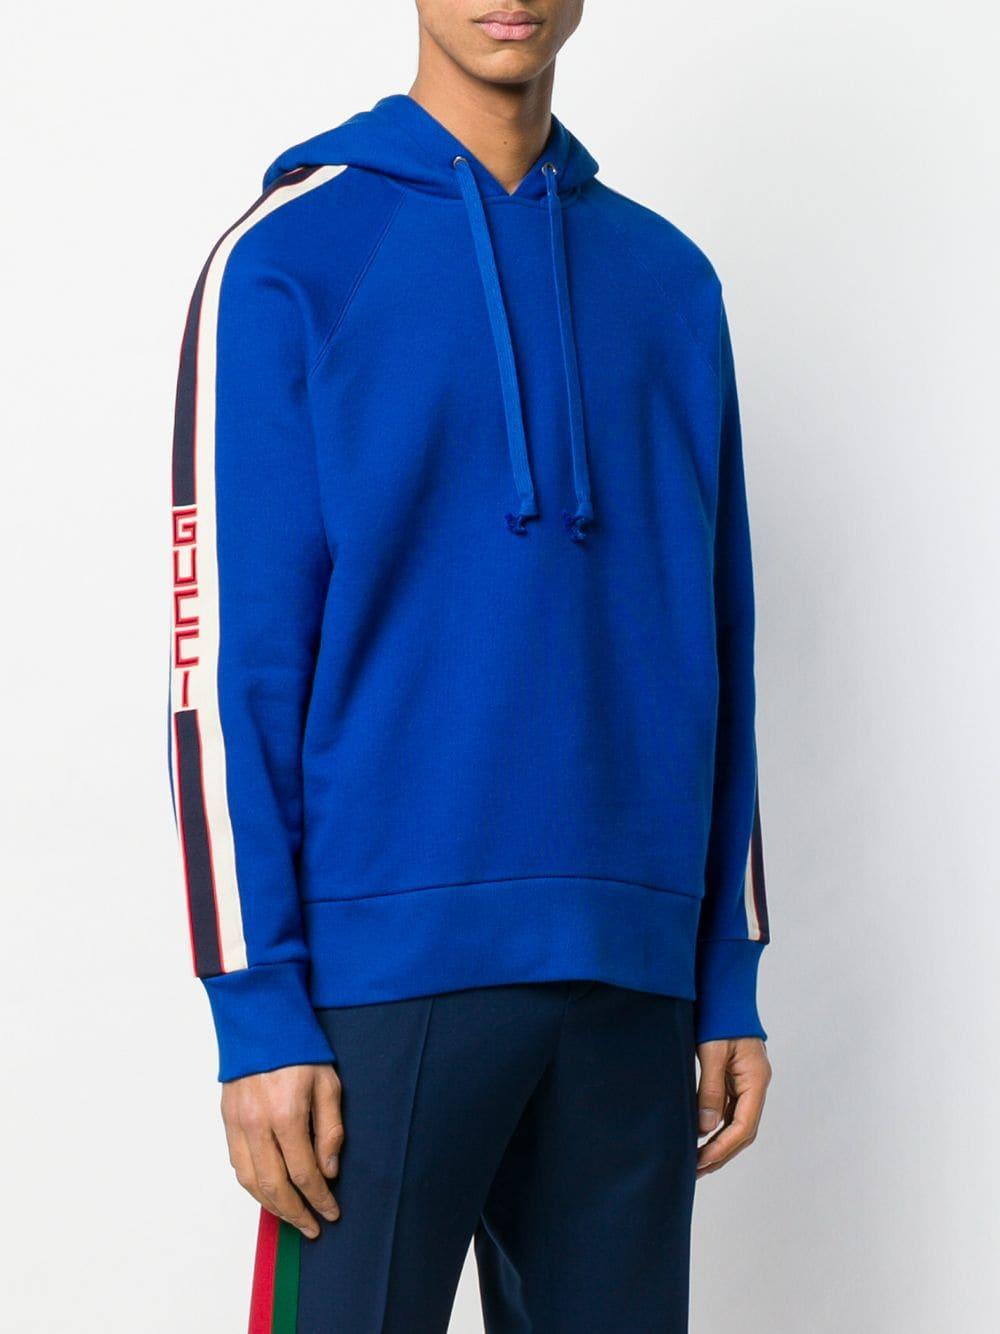 Gucci Cotton Logo Stripe Hoodie in Blue for Men - Lyst